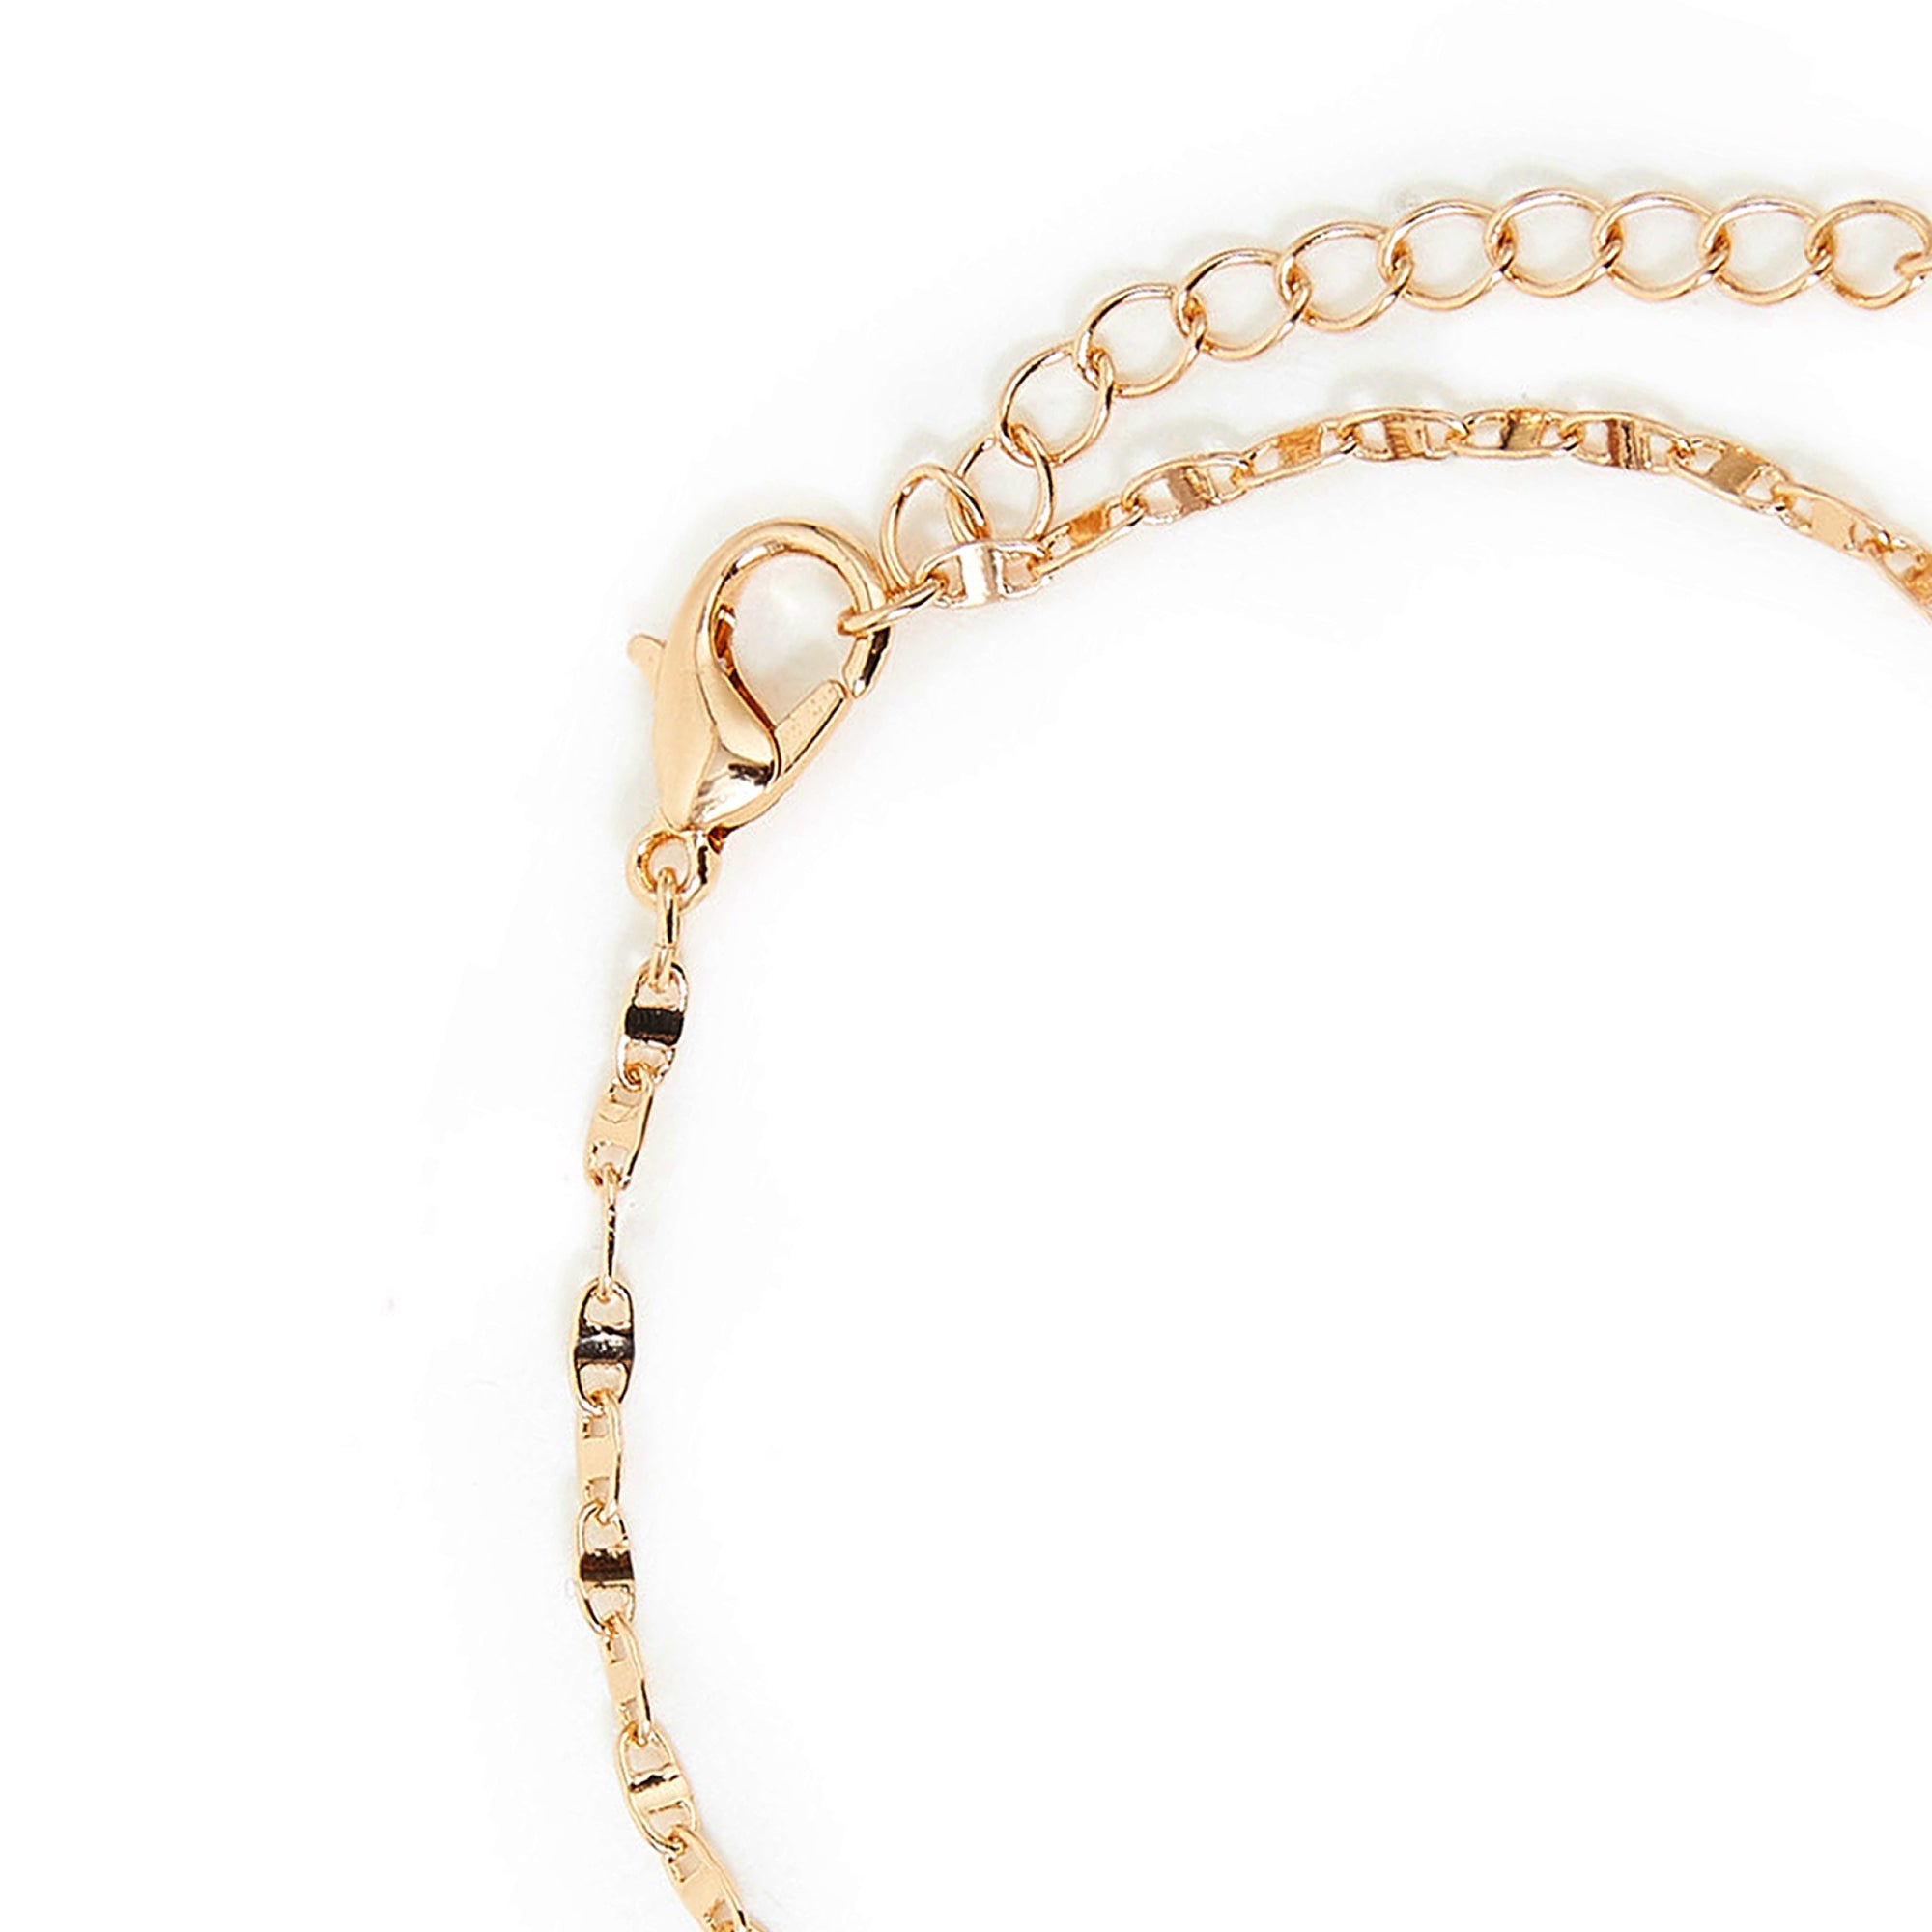 Buy Dainty Heart Chain Bracelet,Simple Delicate Stacking Heart Chain  Bracelets for Women at Amazon.in